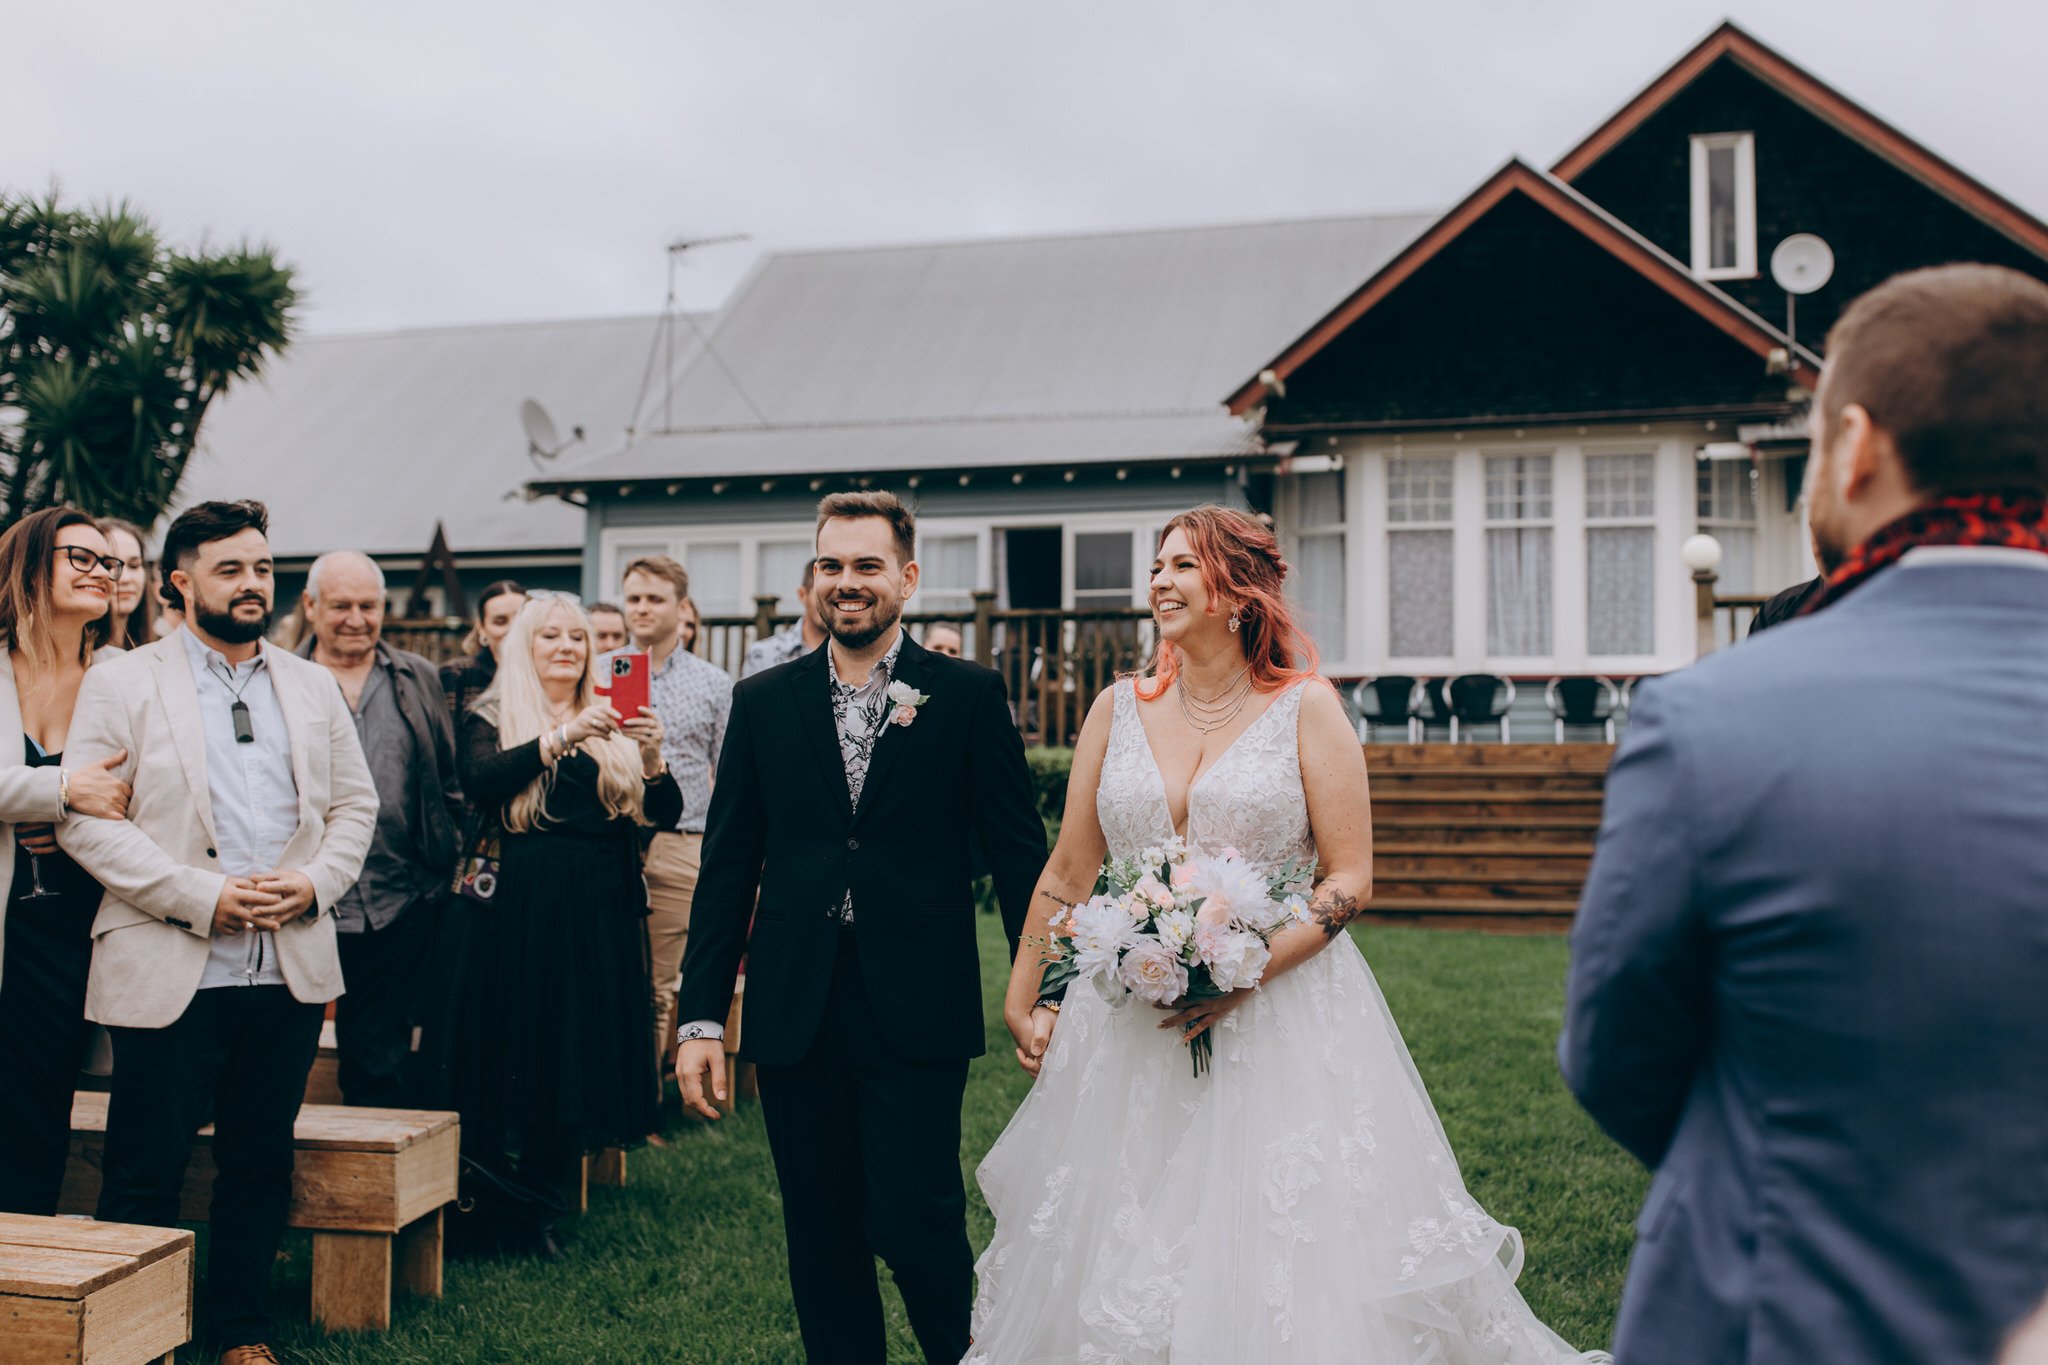 Connemara Country lodge Auckland wedding 34.jpg